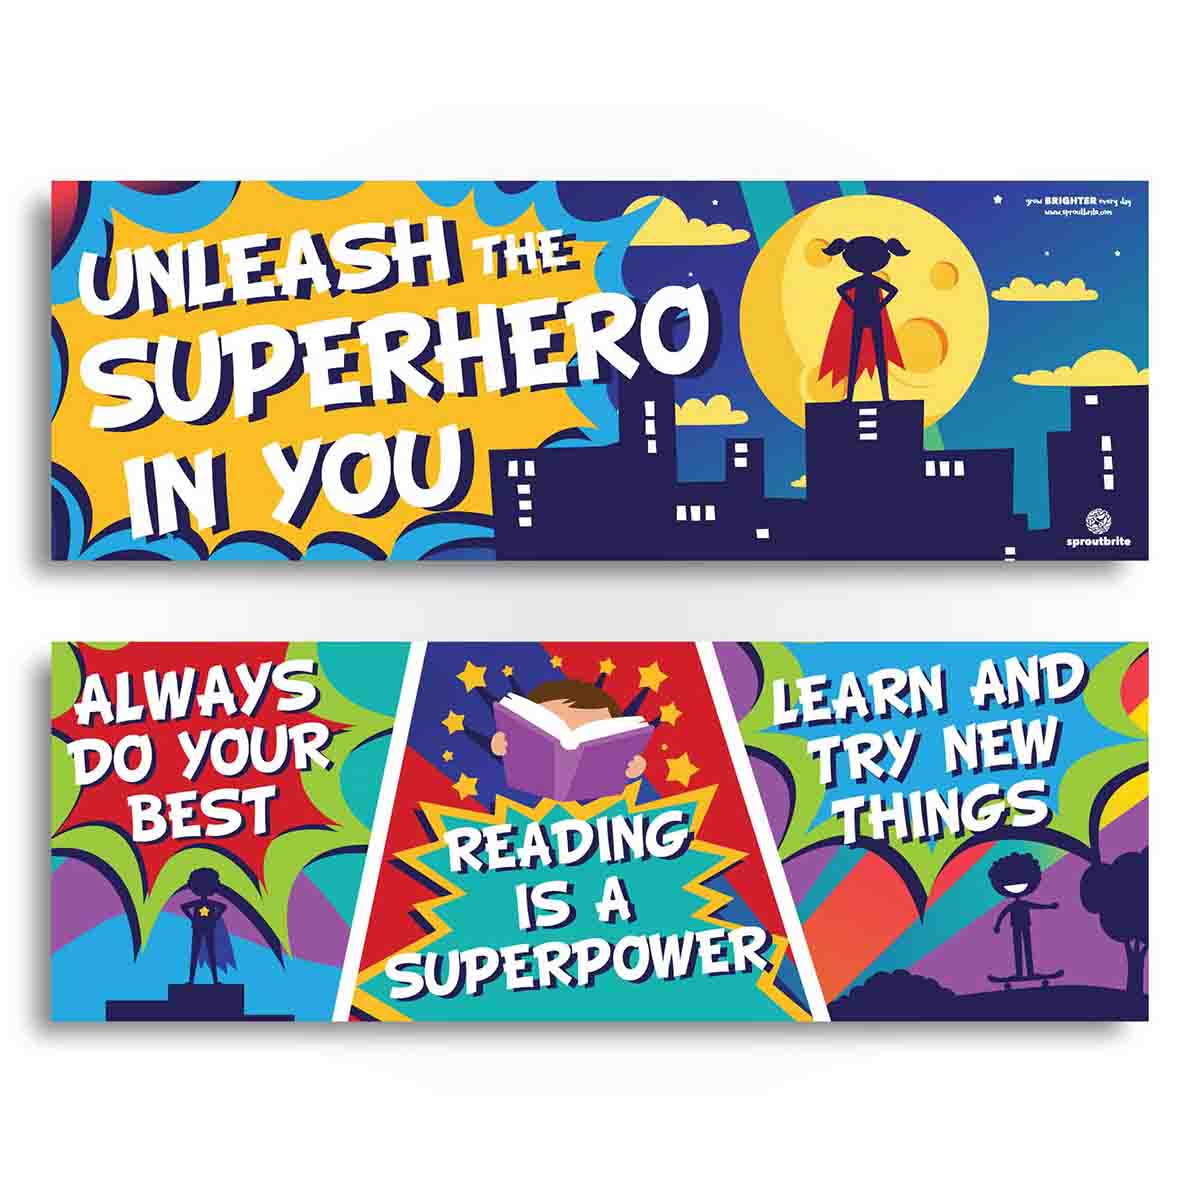 Superhero Theme Classroom Poster Pack